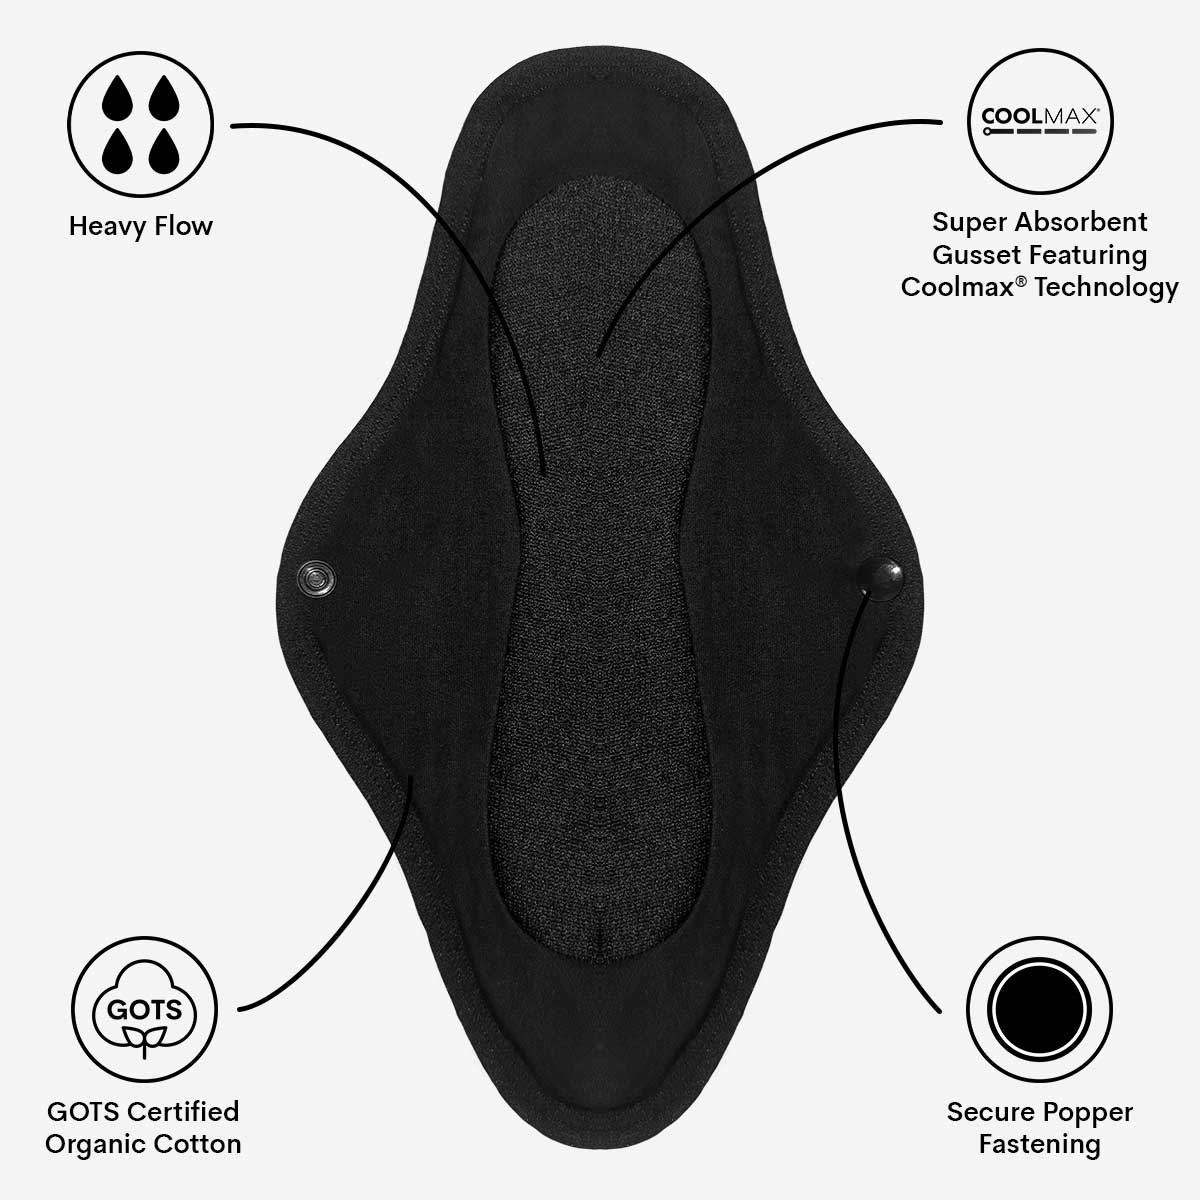 WUKA Reusable Period Pads 2 Pack Style Heavy Flow Black Colour Features